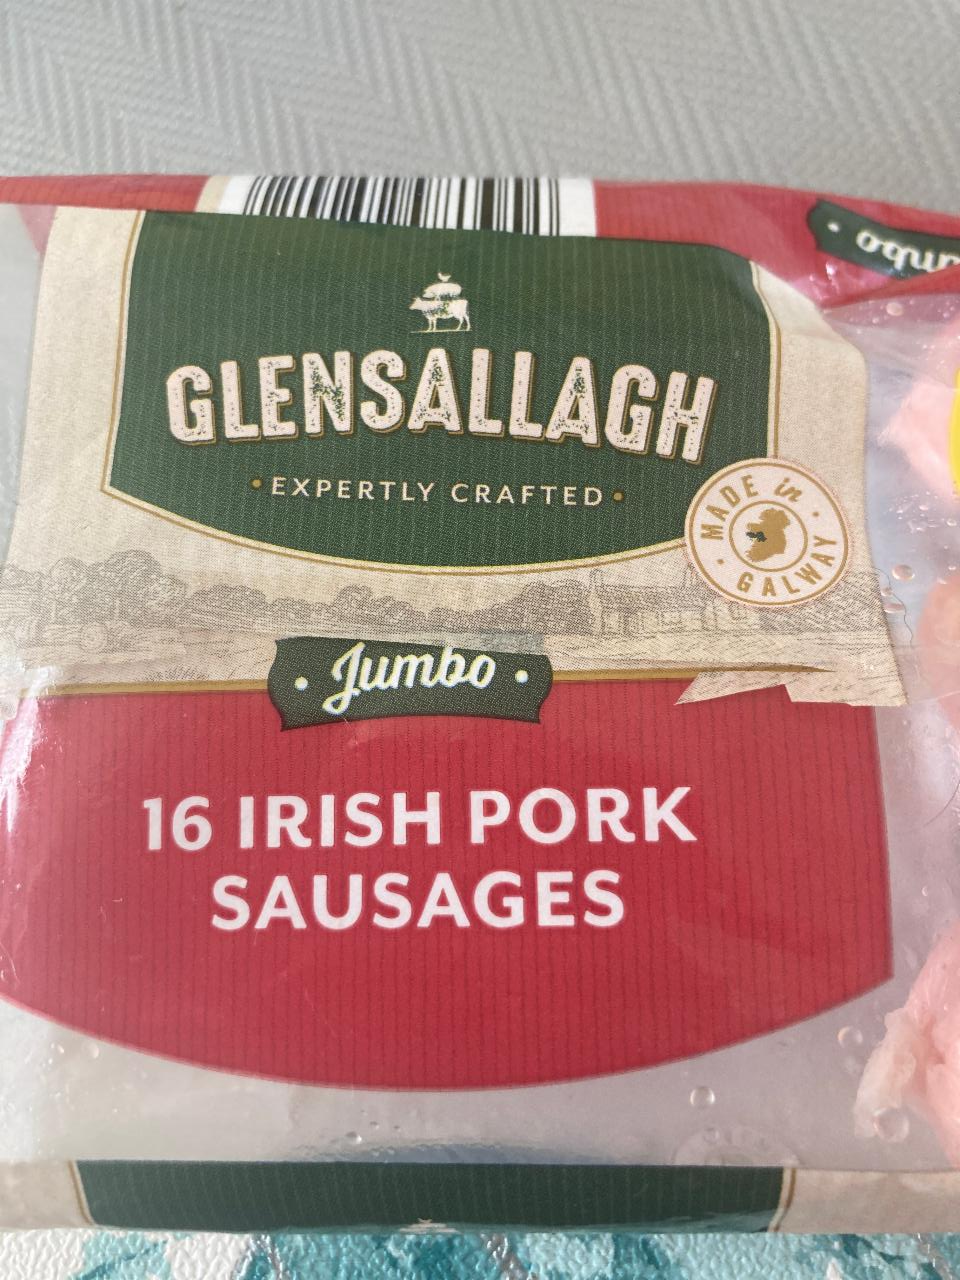 Fotografie - Jumbo 16 irish pork sausages Glensallagh